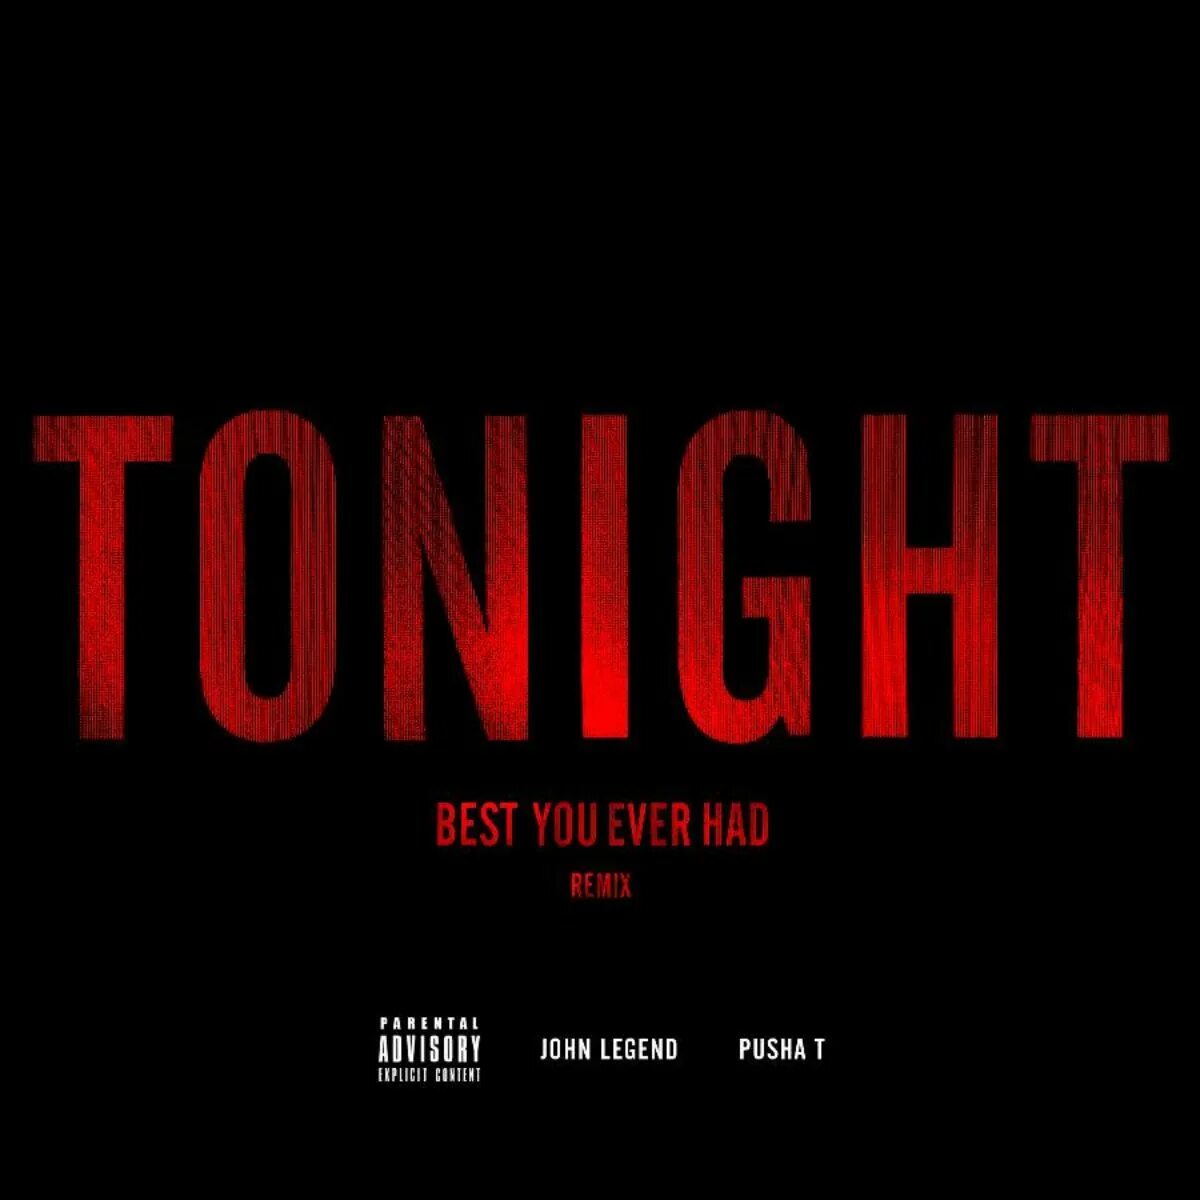 Feat pusha. John Legend Tonight. Pusha t. John Legend Tonight перевод. John Legend ft. Pusha t Tonight (best you ever heard) (Remix).